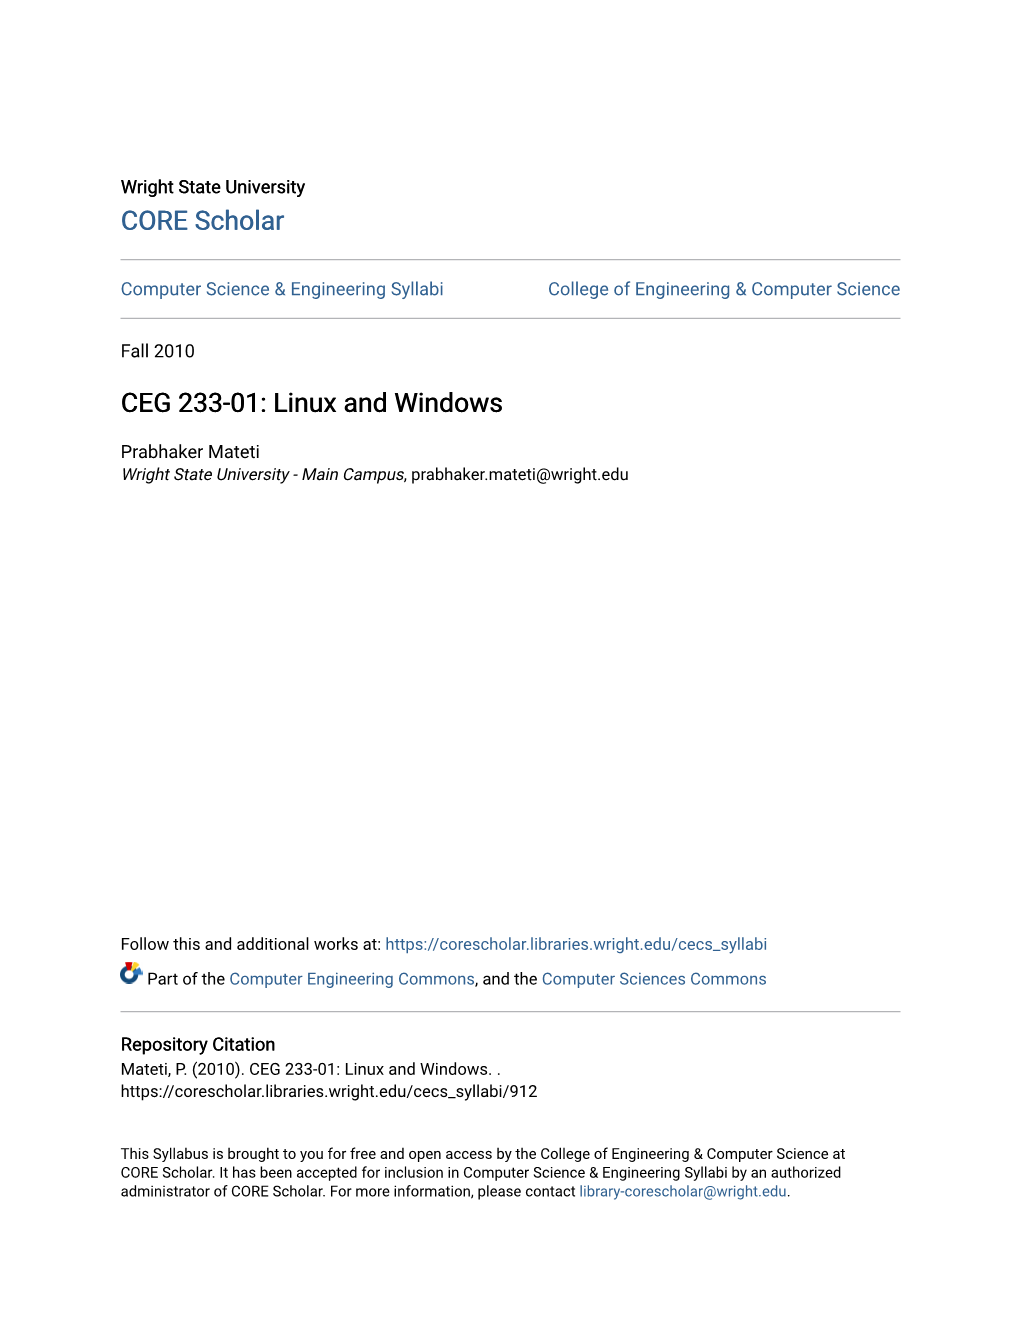 CEG 233-01: Linux and Windows